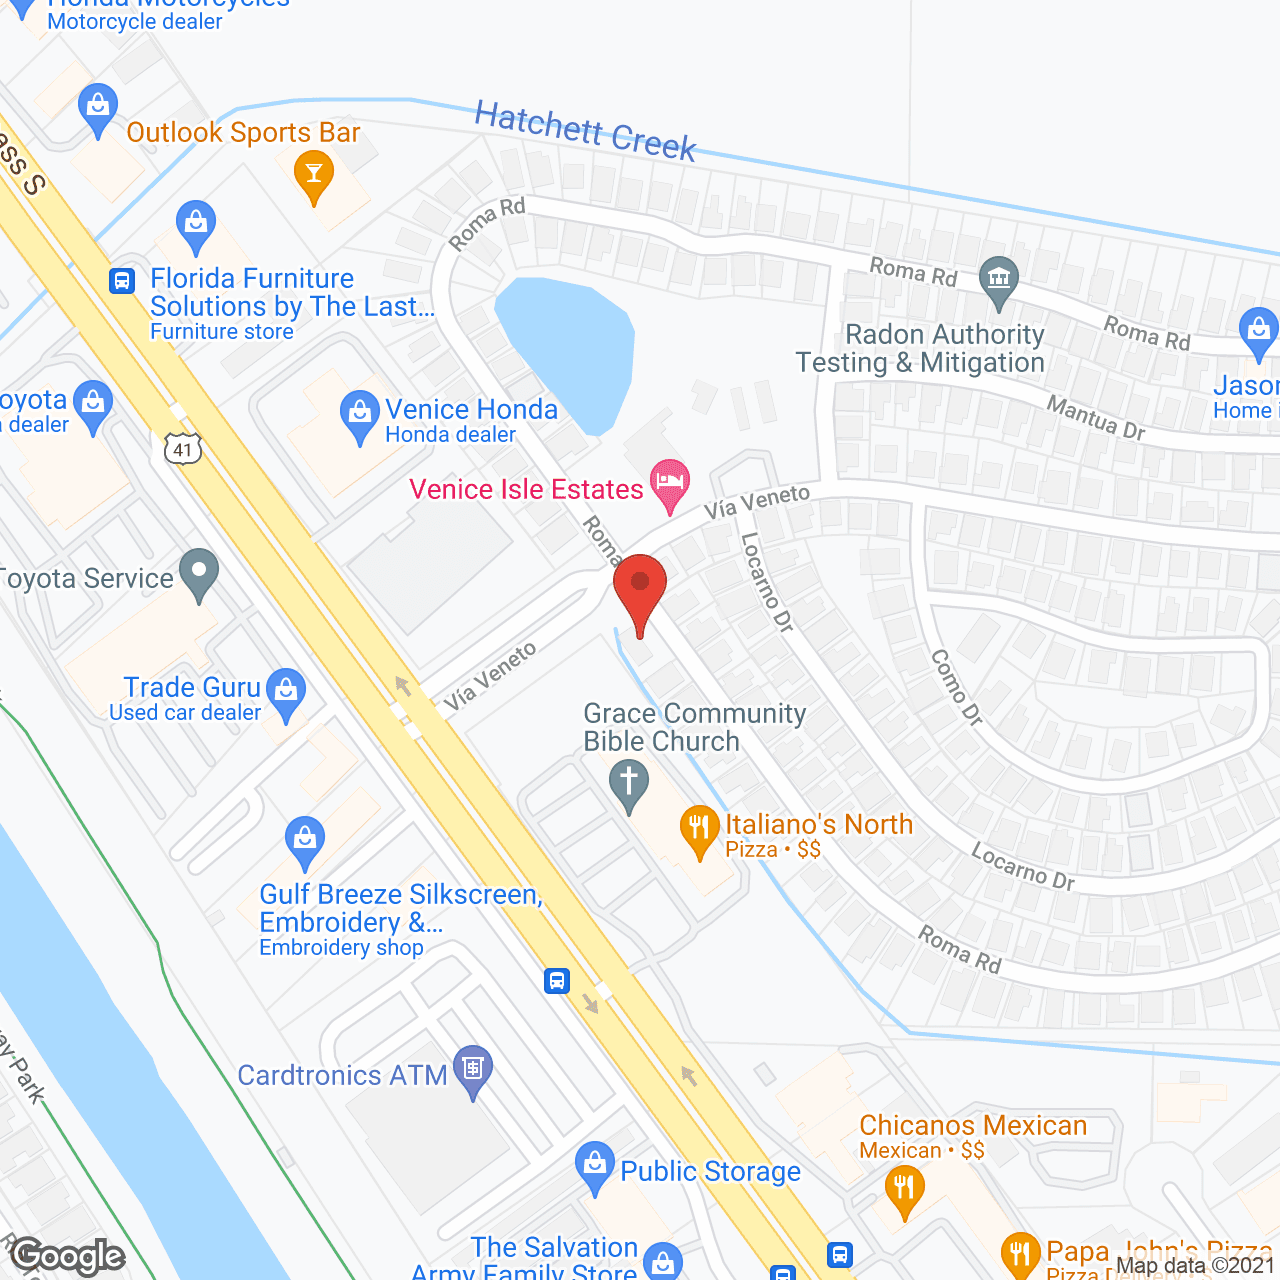 Venice Isle Estates in google map